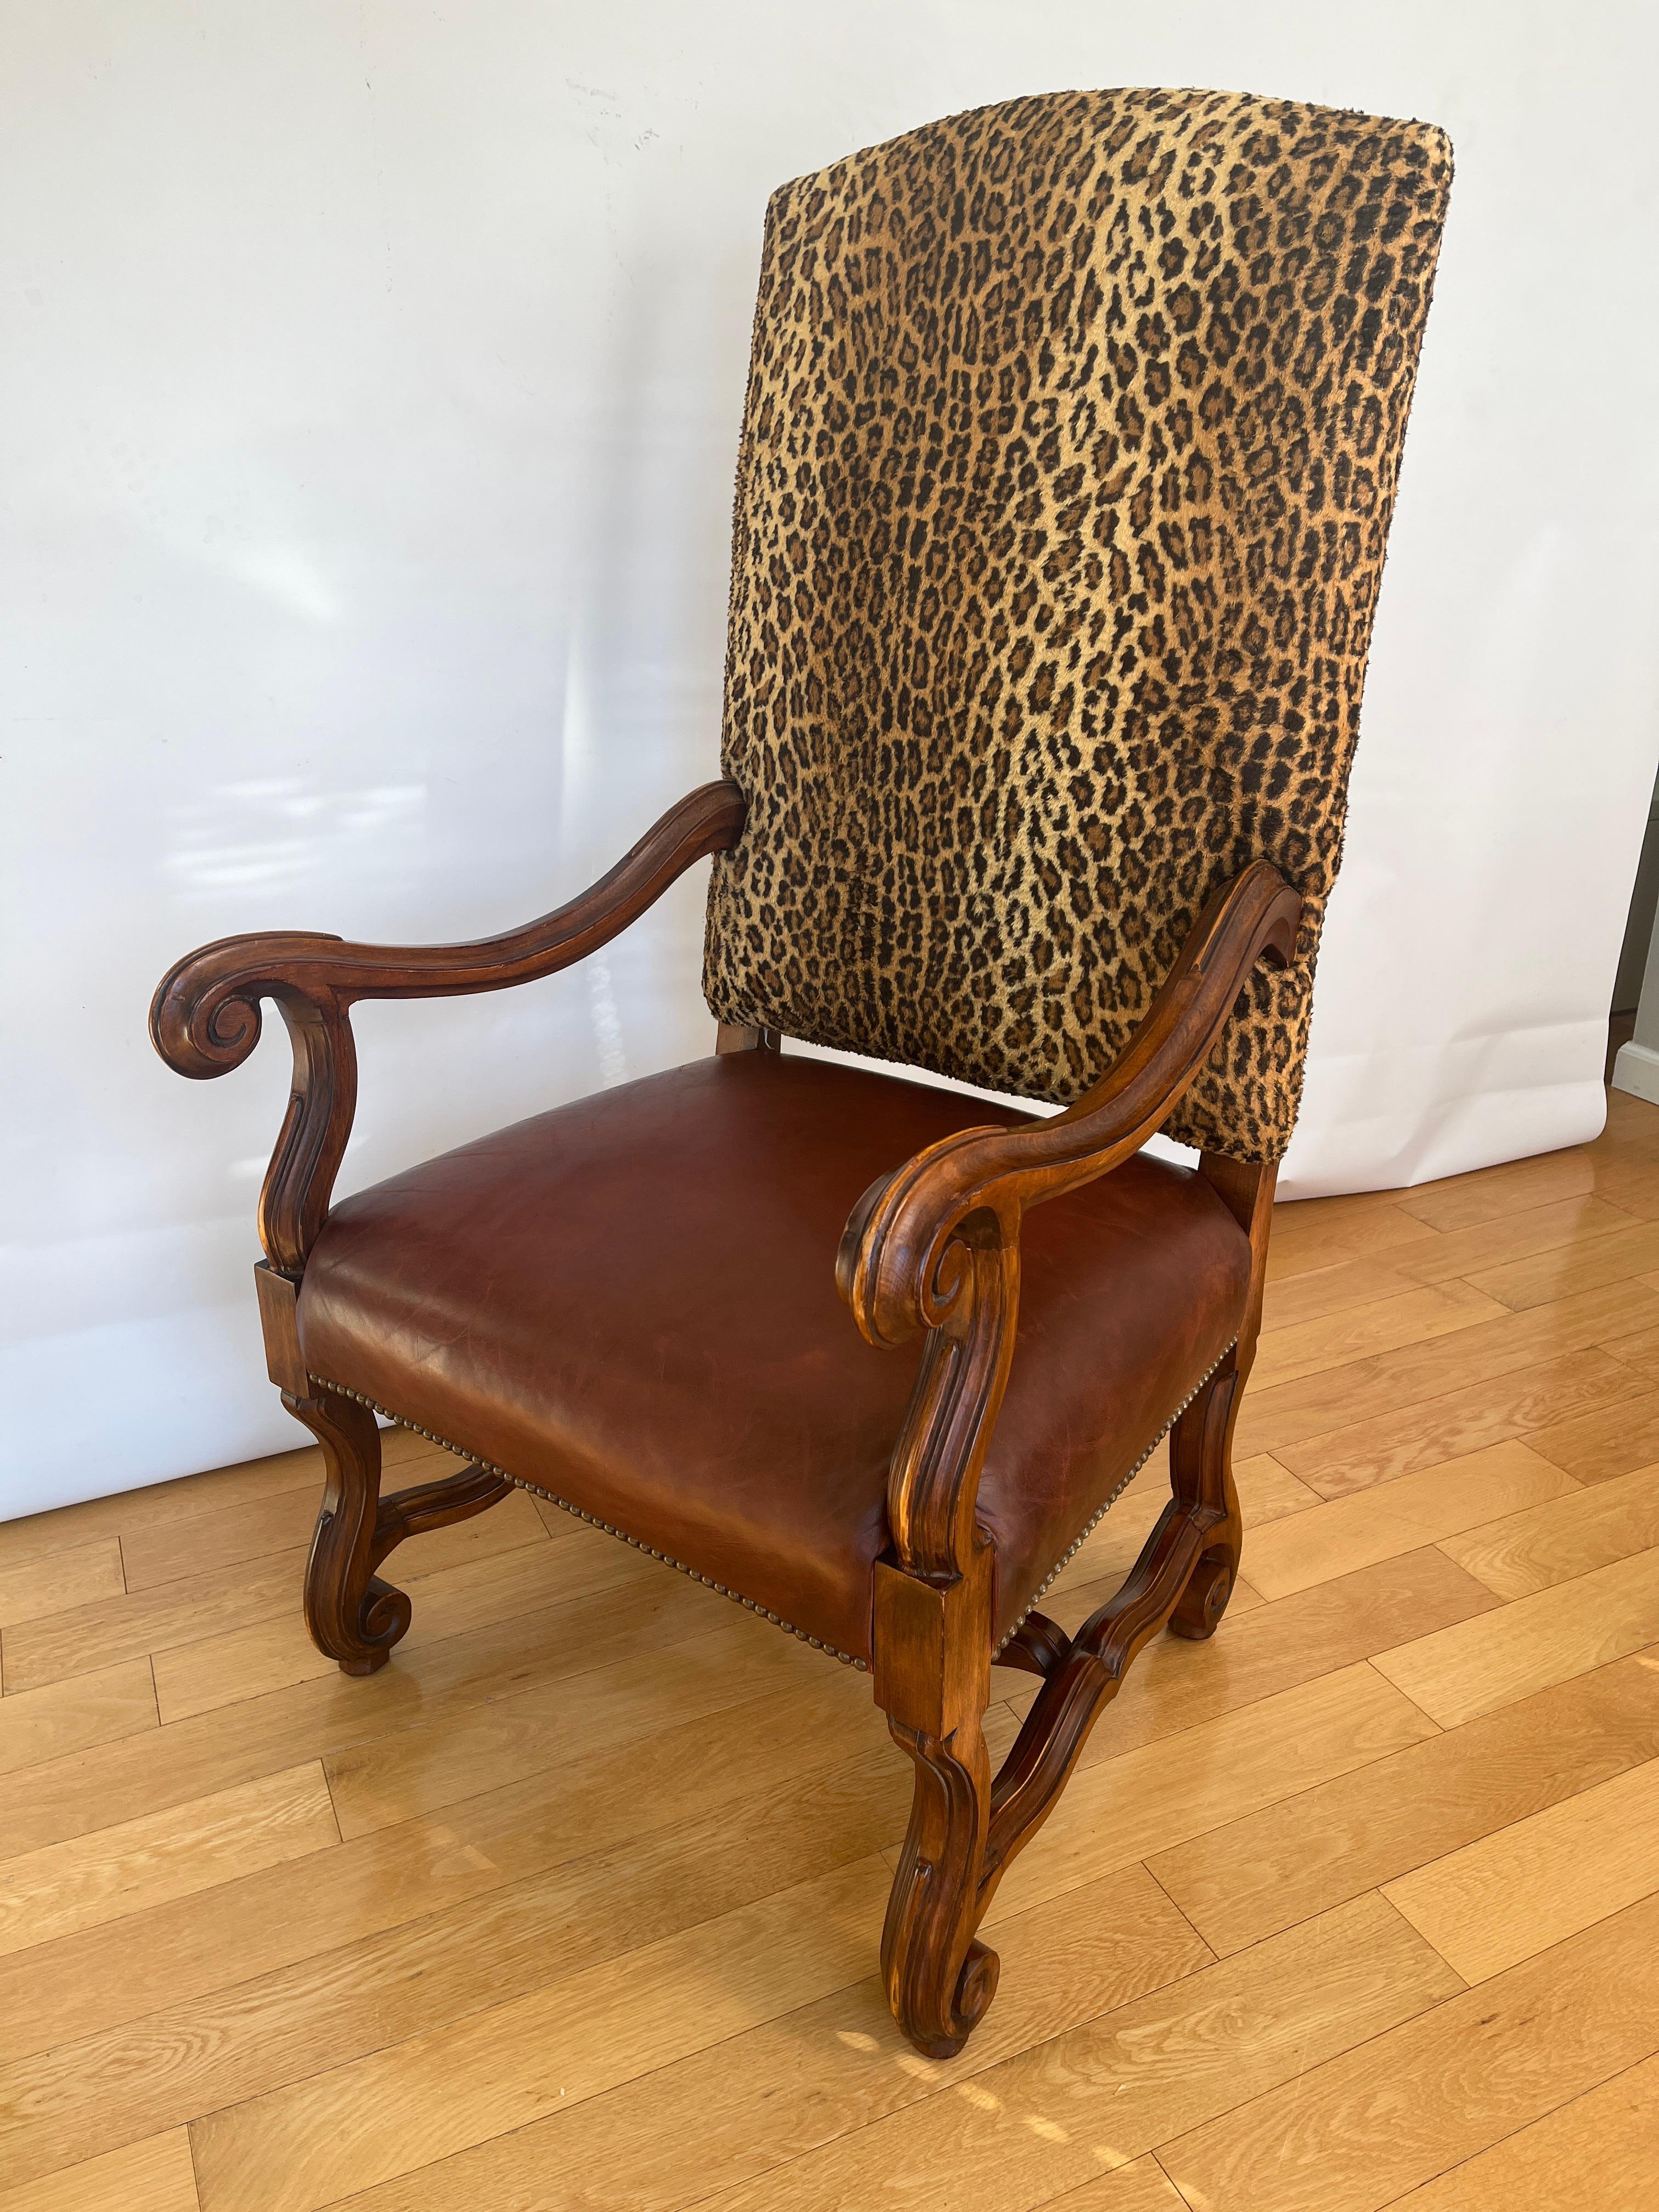 A beautiful and impressive Vintage Ralph Lauren Royal Leather & Leopard Armchair.